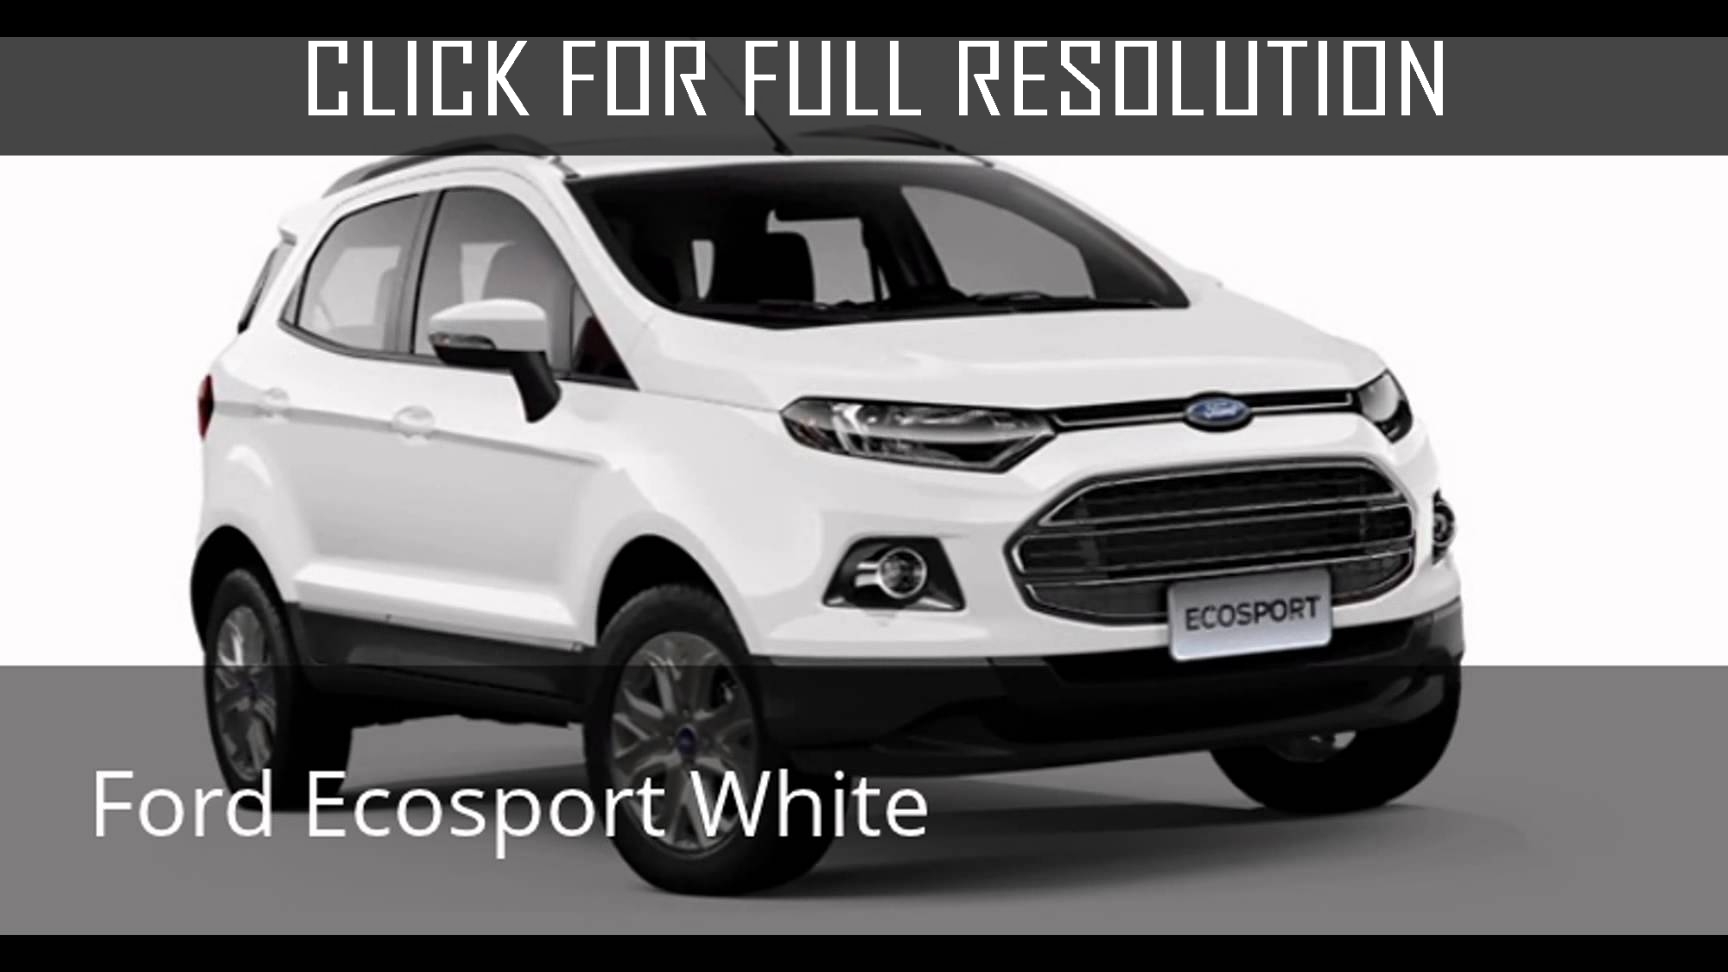 Ford Ecosport White